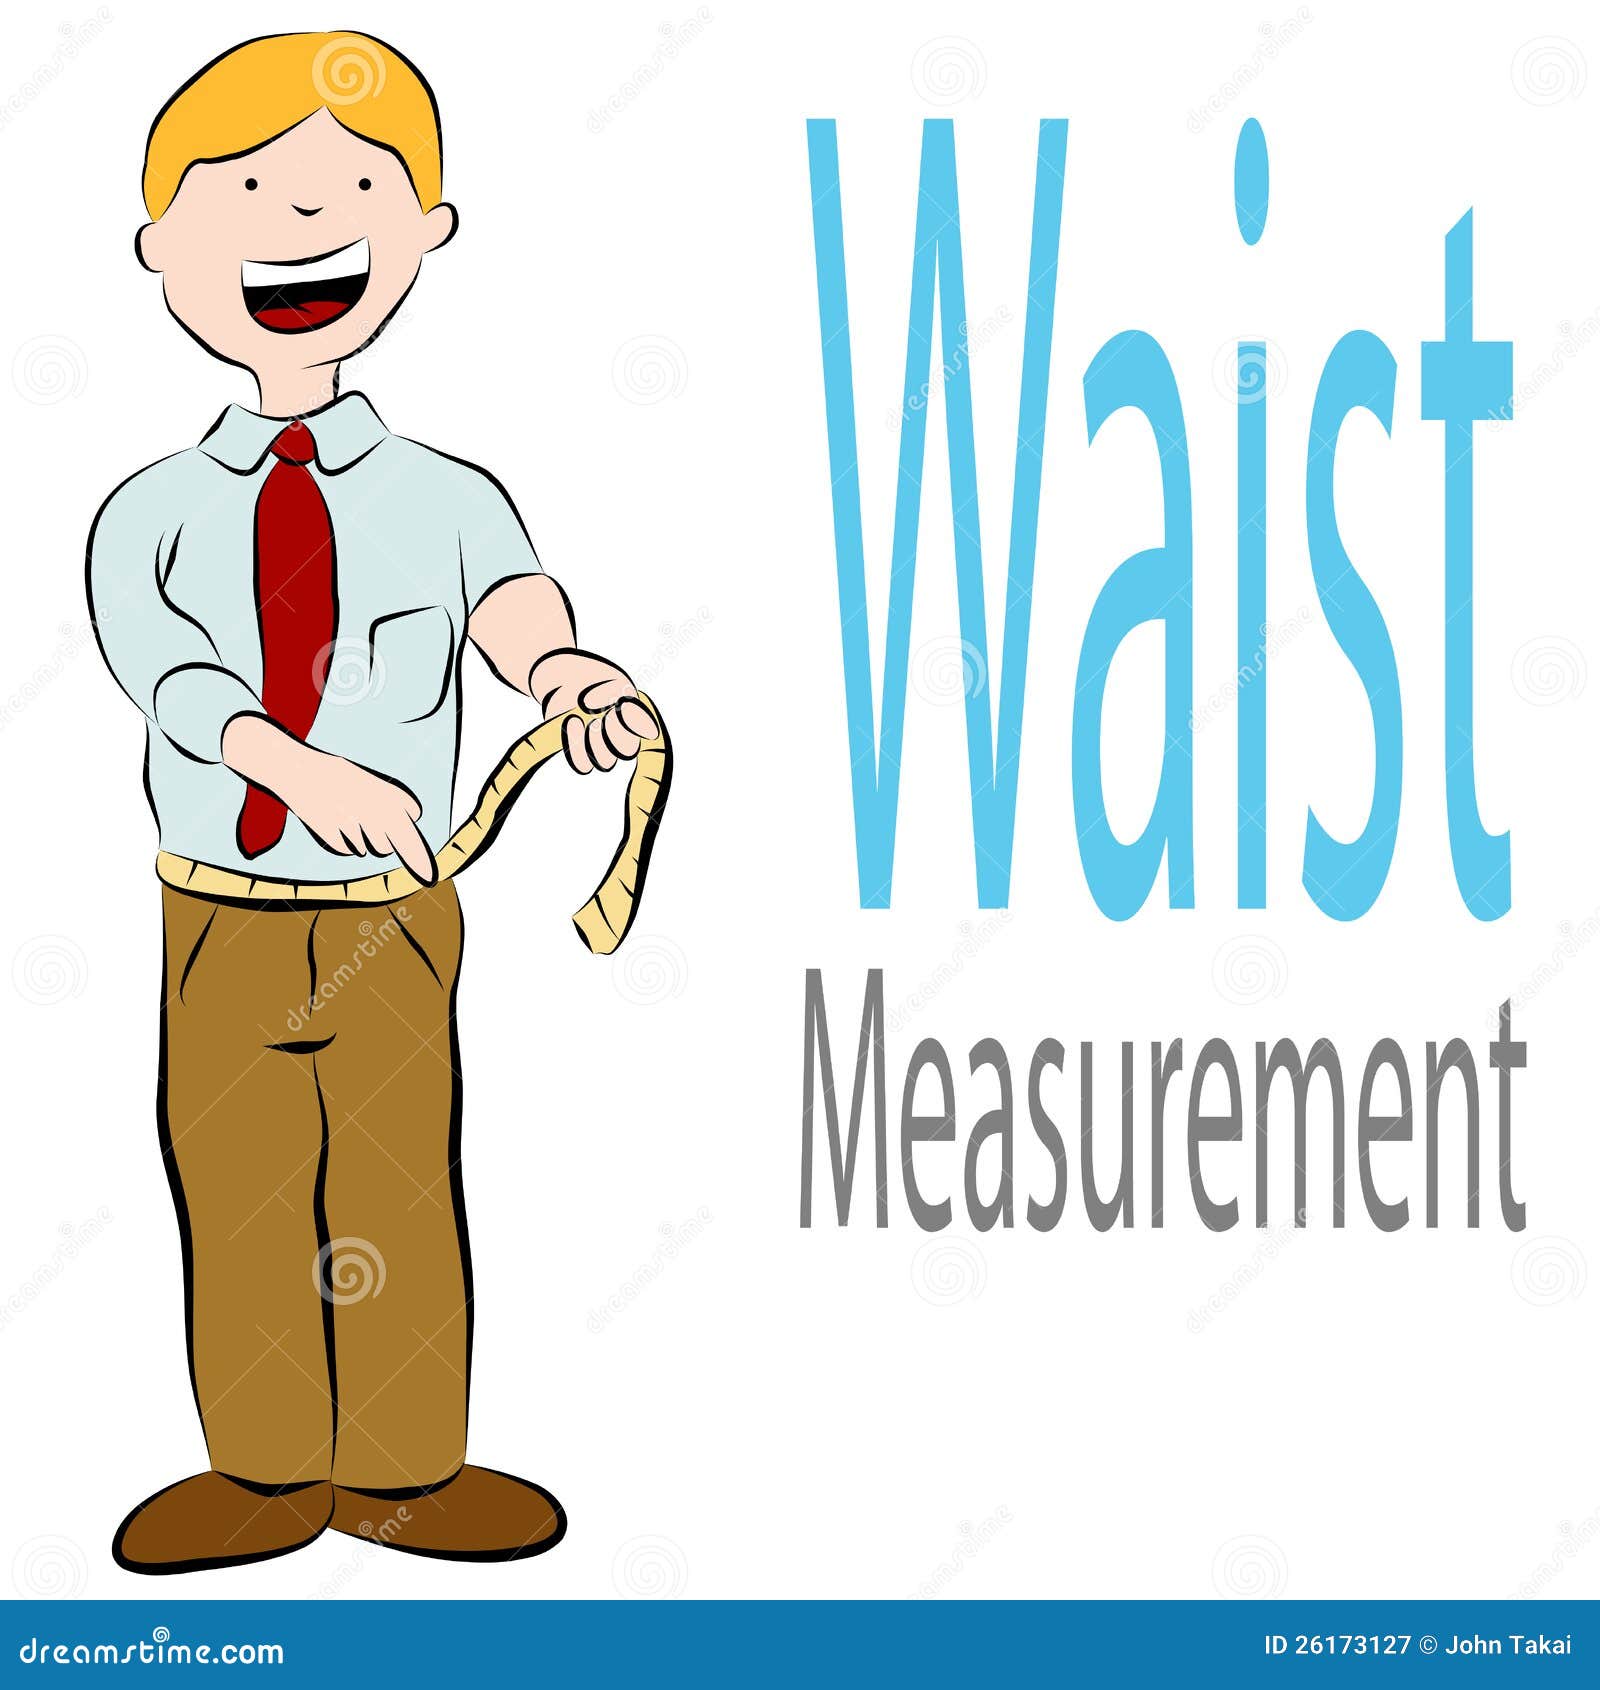 Healthy Waist Measurement stock vector. Image of measuring - 26173127